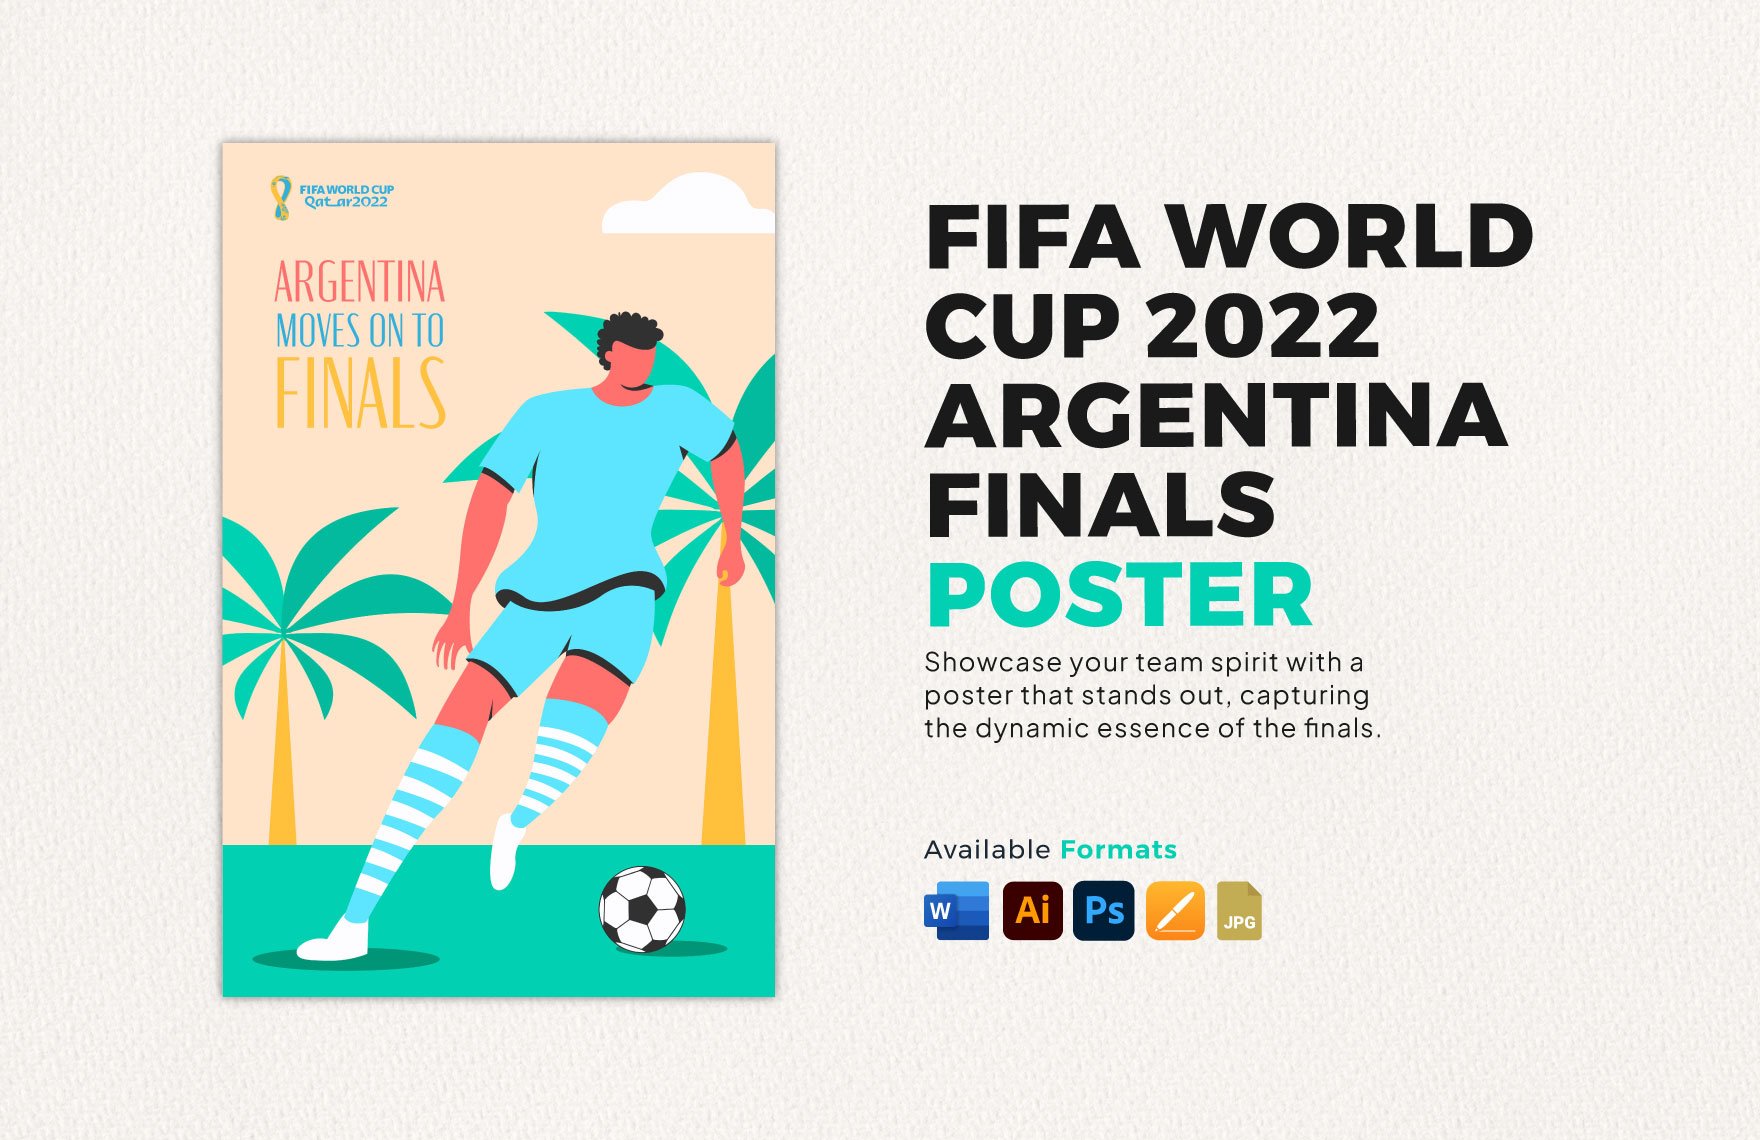 FIFA World Cup 2022 Argentina Finals Poster